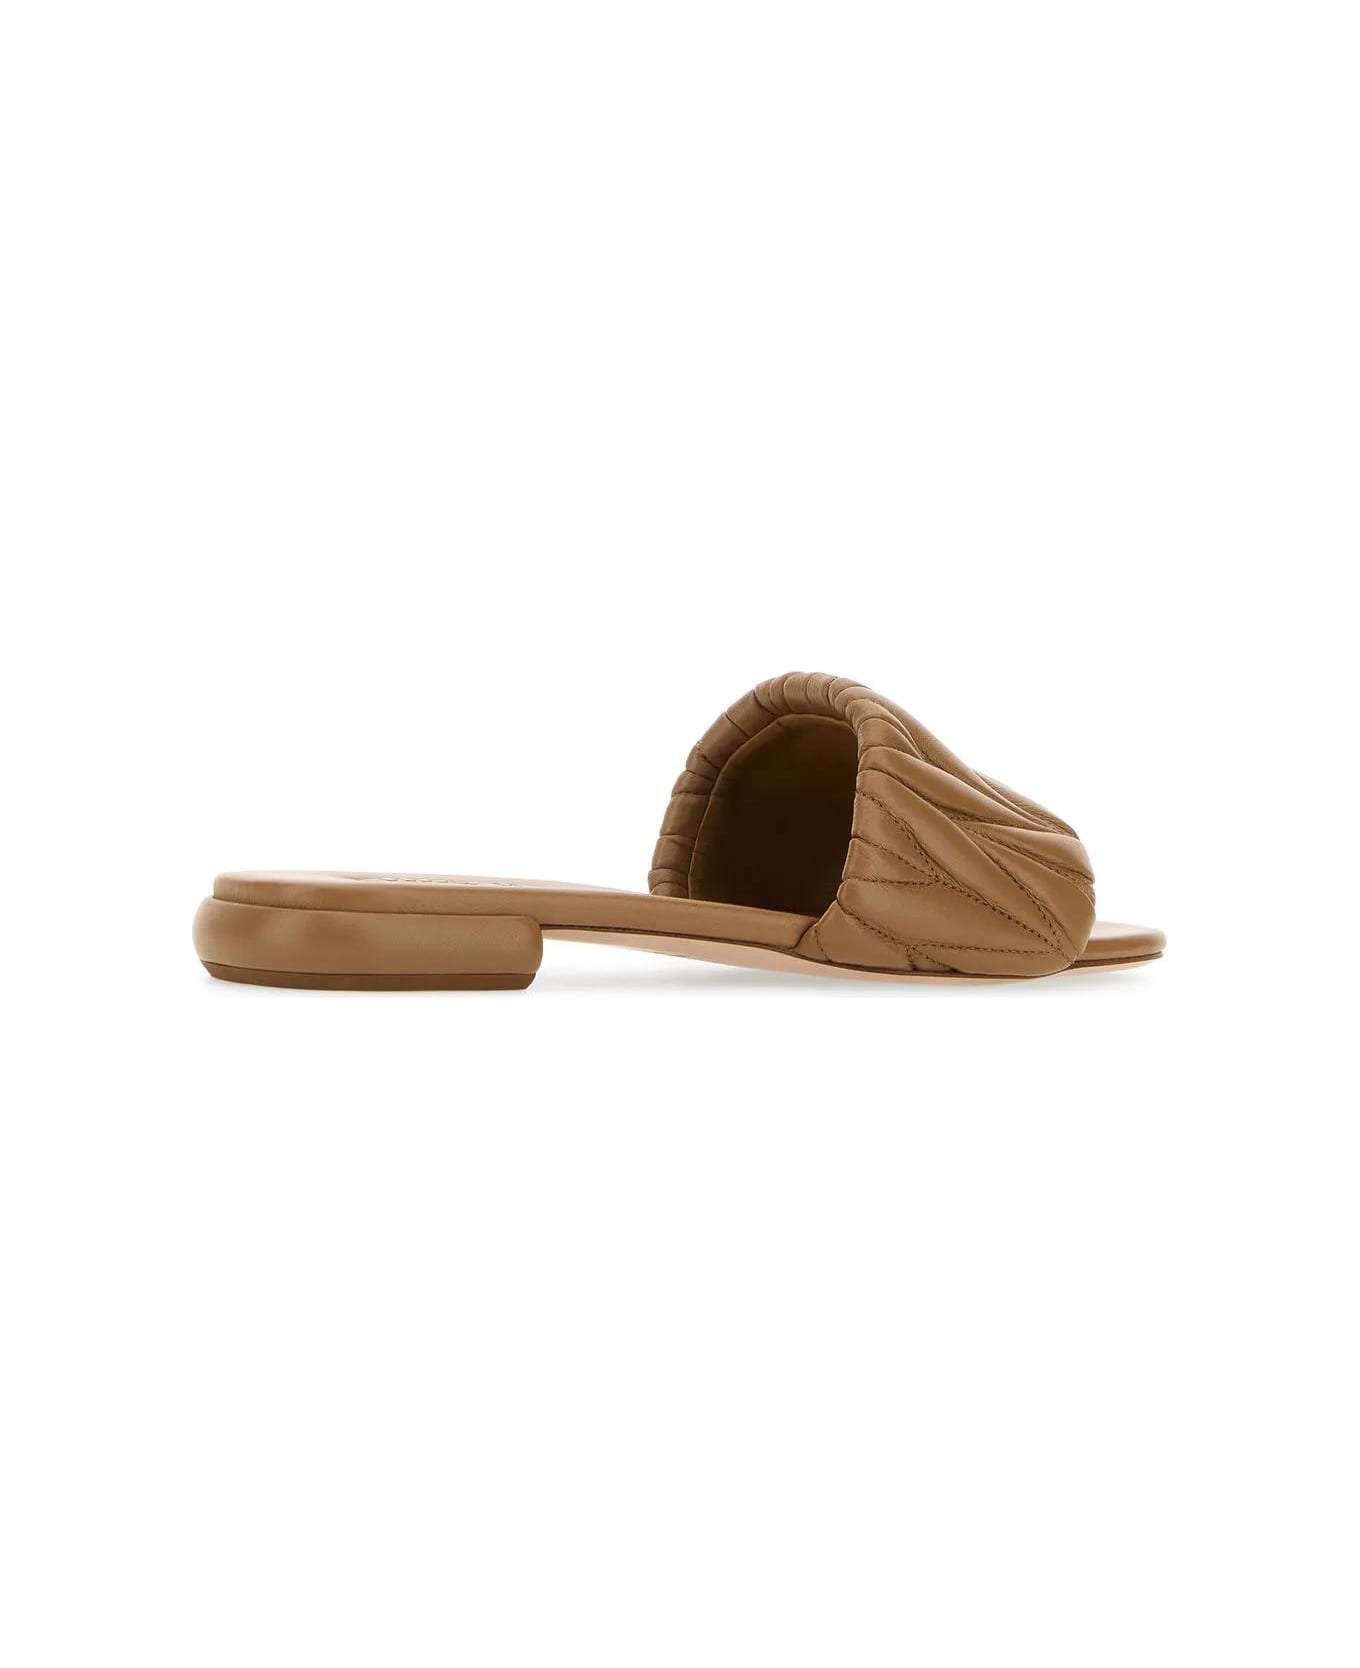 Miu Miu Caramel Nappa Leather Slippers - Caramello